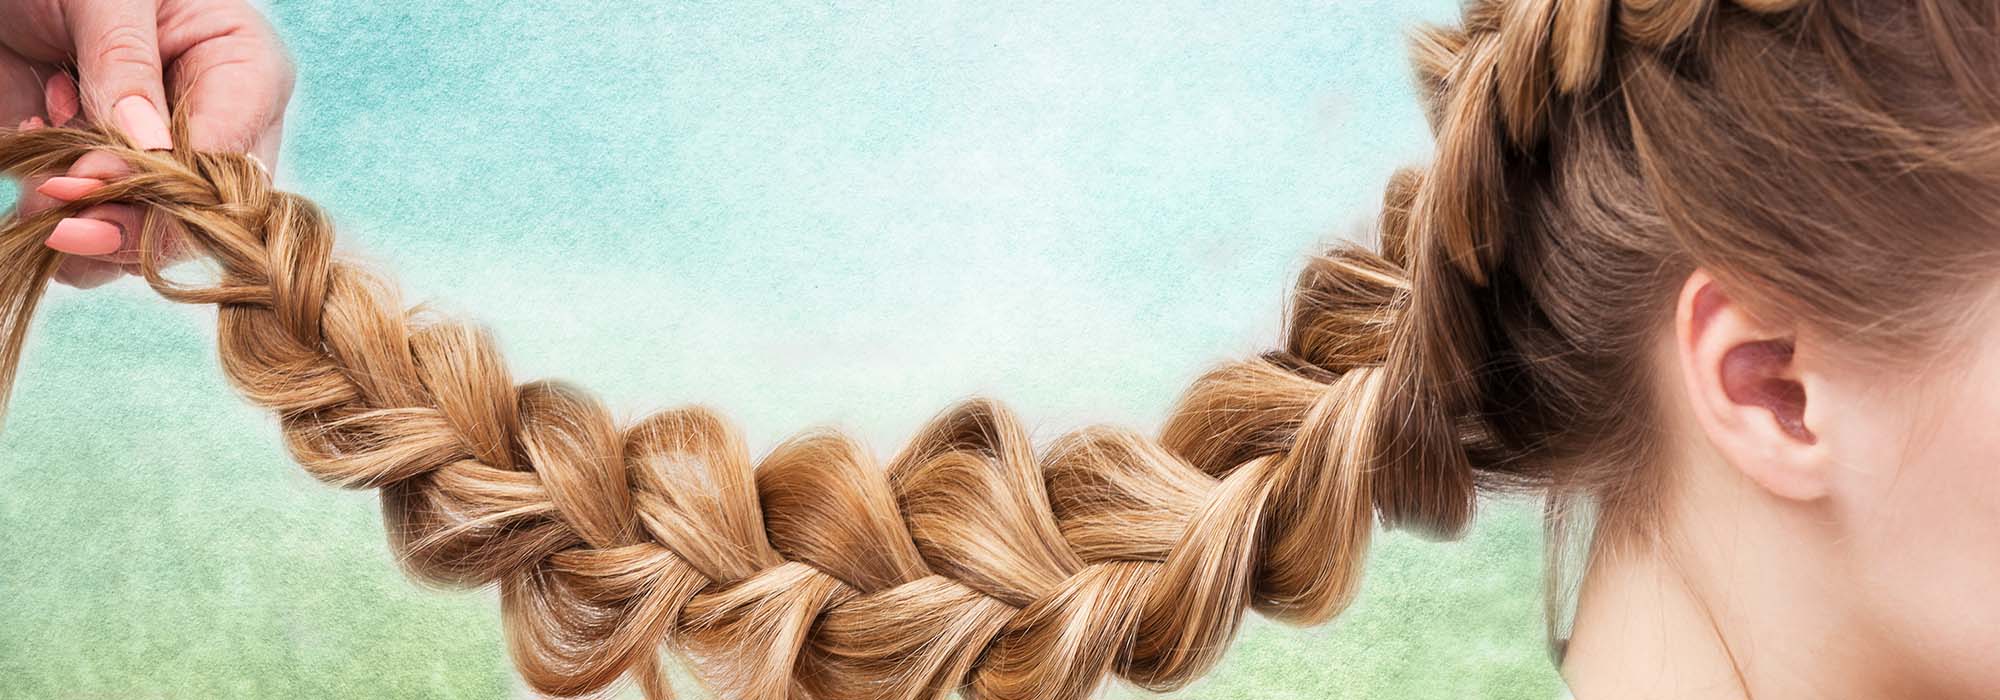 Hair in Ponytail 